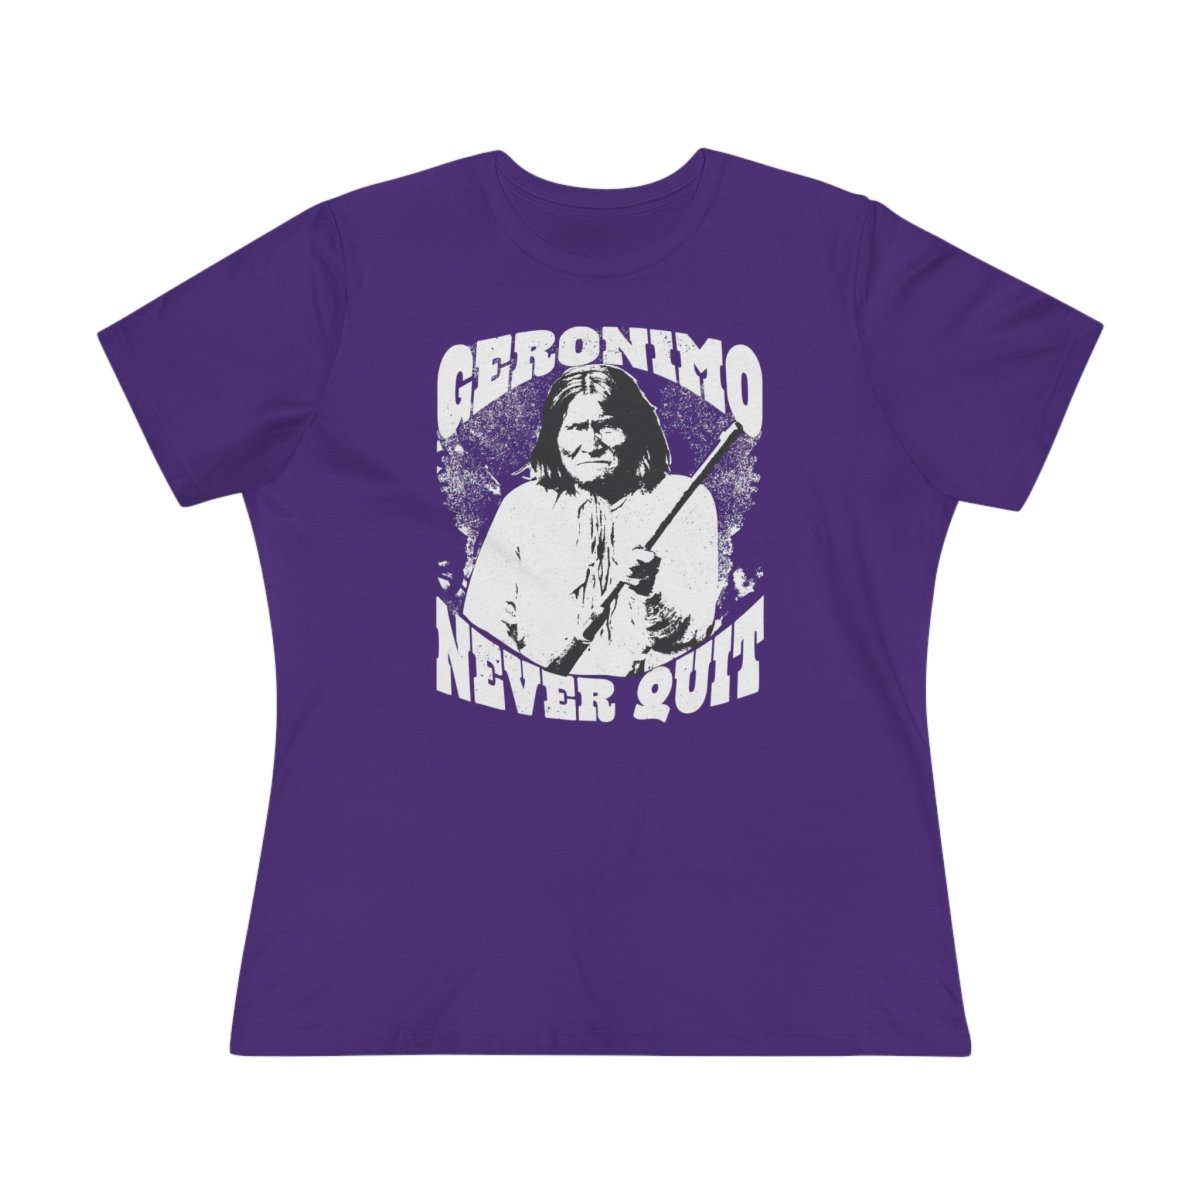 Geronimo Never Quit Women's Premium Relaxed Fit T-Shirt, Warrior Spirit Inspiration